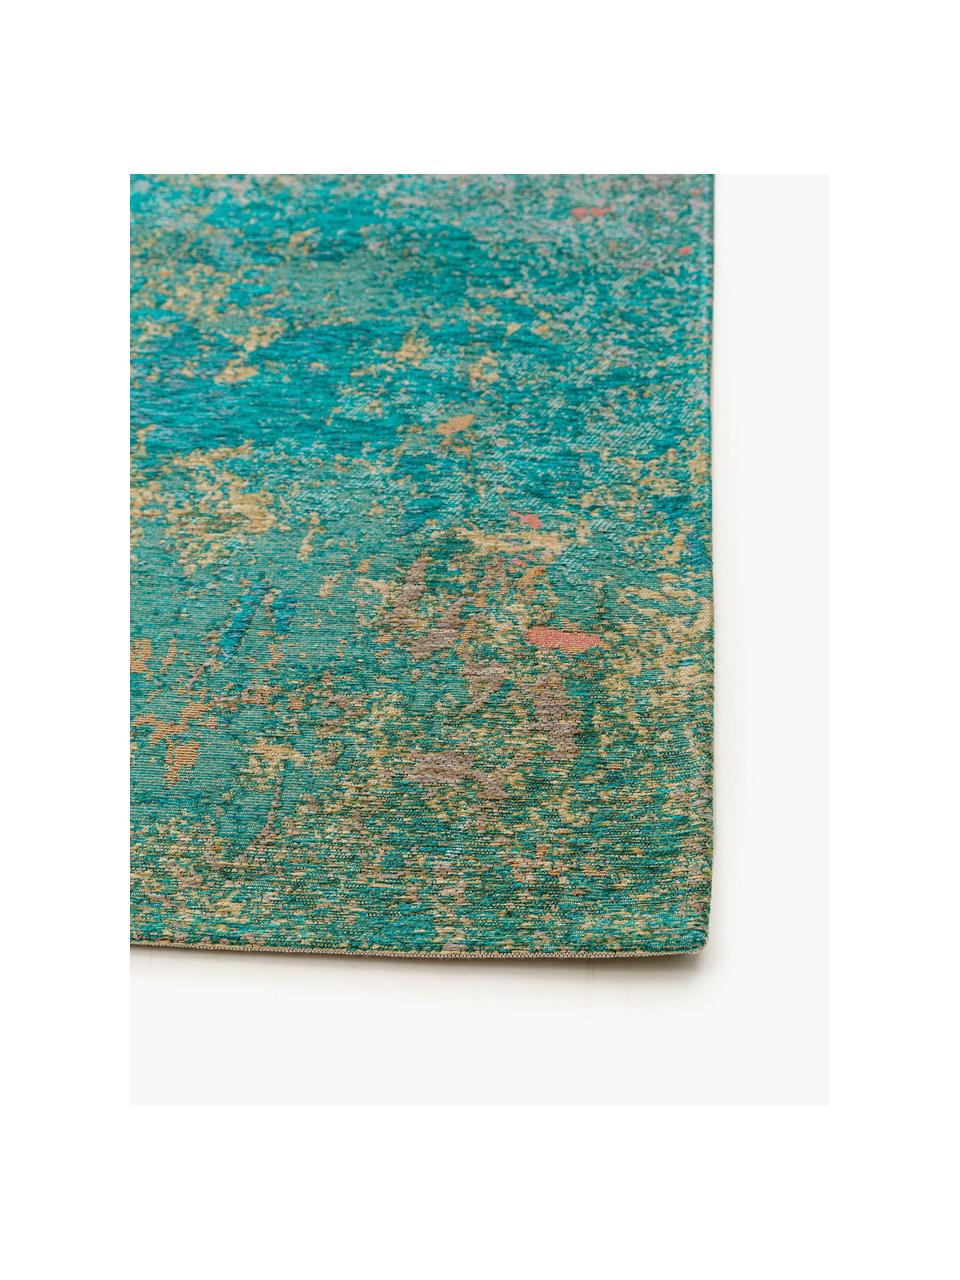 Tapis avec motif abstrait Stay, 79 % polyester, 20 % coton, 1 % latex, Turquoise, multicolore, larg. 80 x long. 170 cm